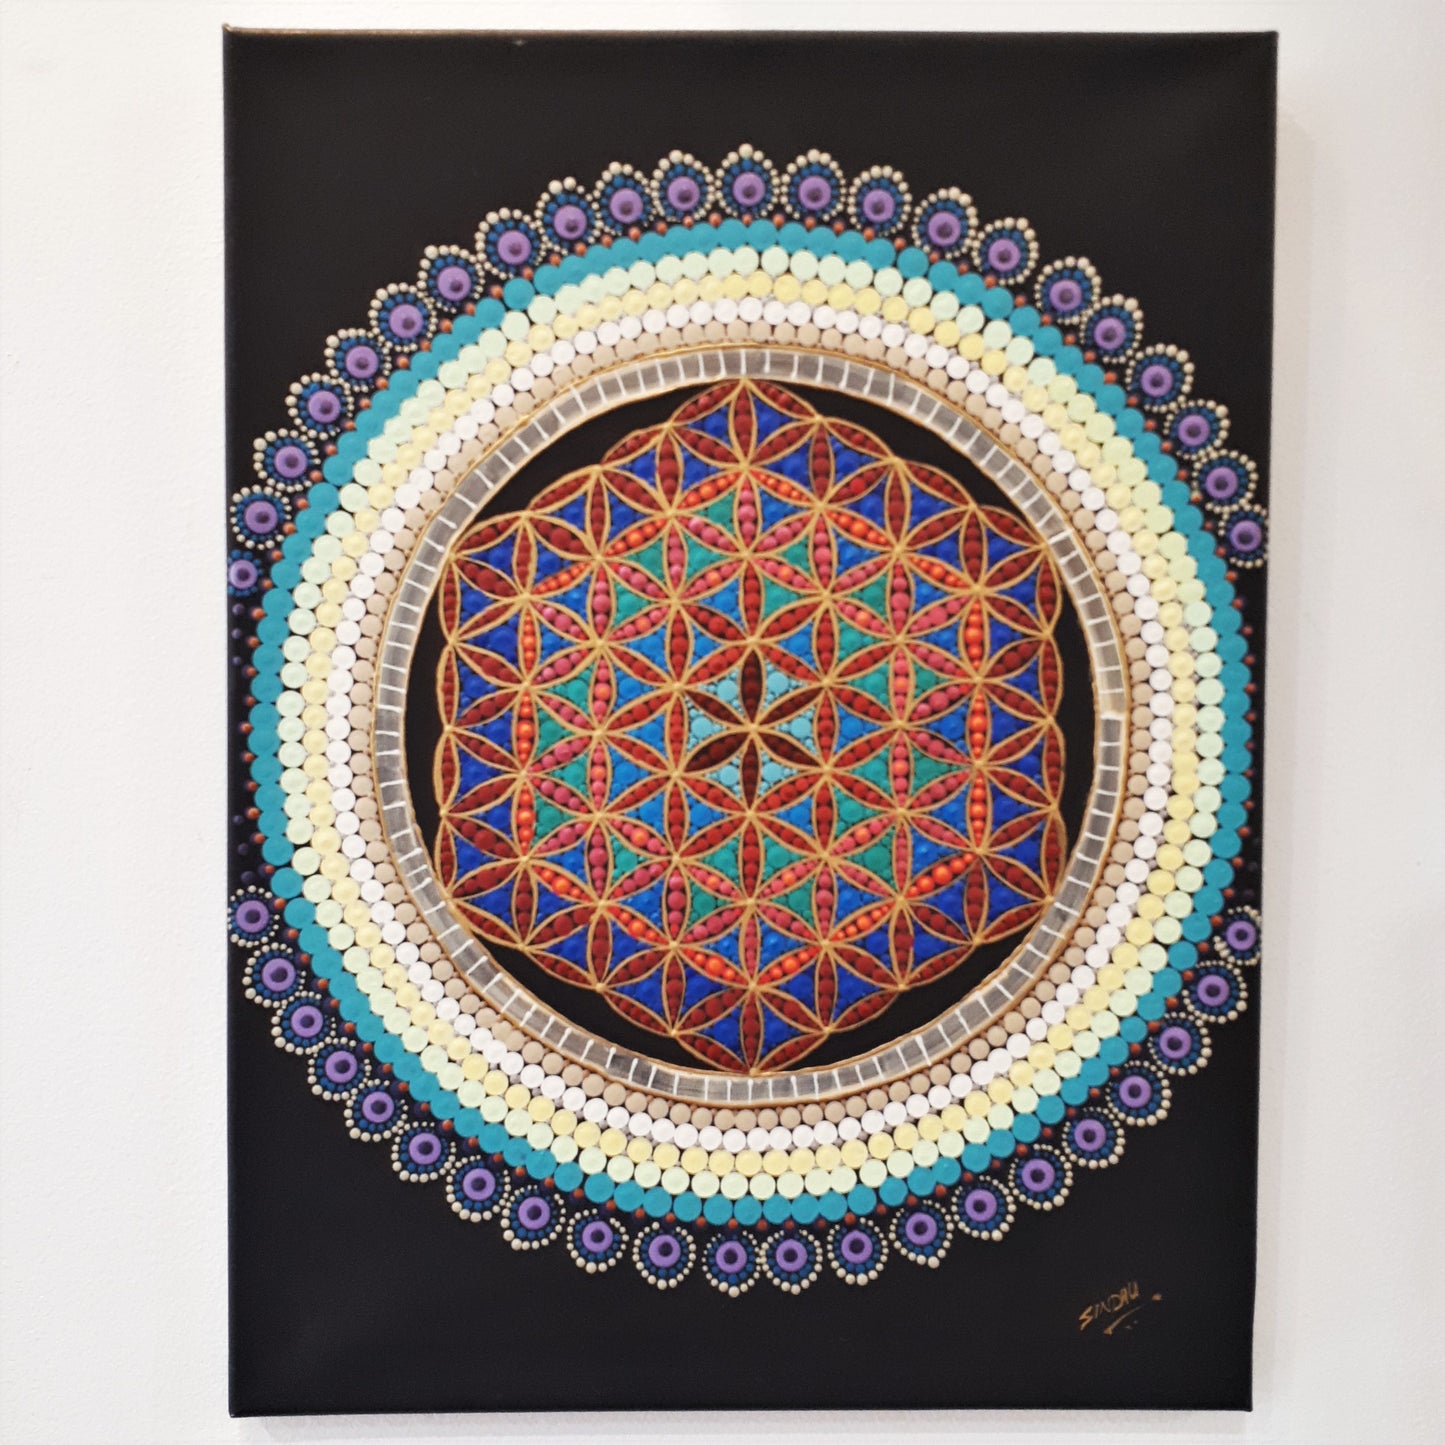 Original Painting - FLOWER OF LIFE - Dot Mandala Art on Canvas